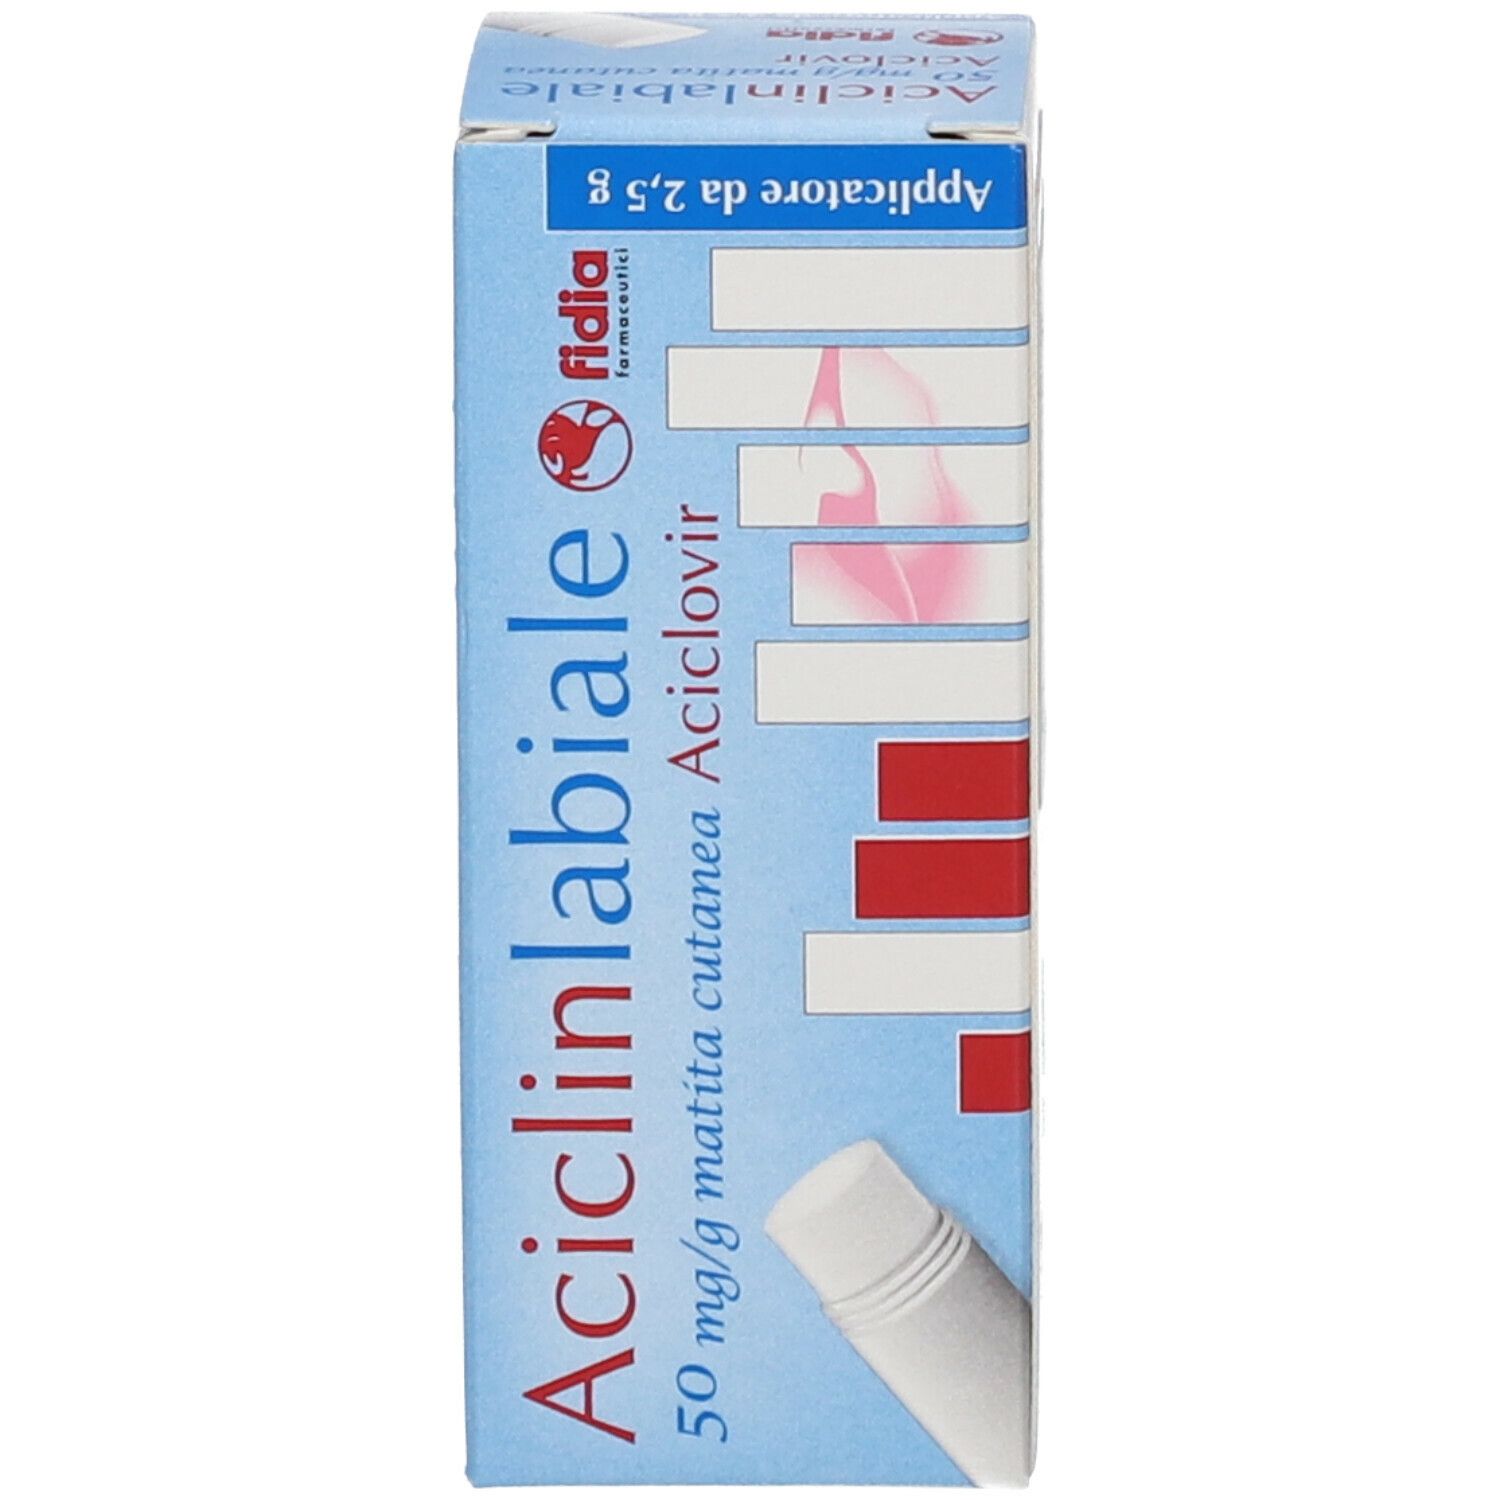 ACICLINLABIALE Aciclovir 5% Matita cutanea